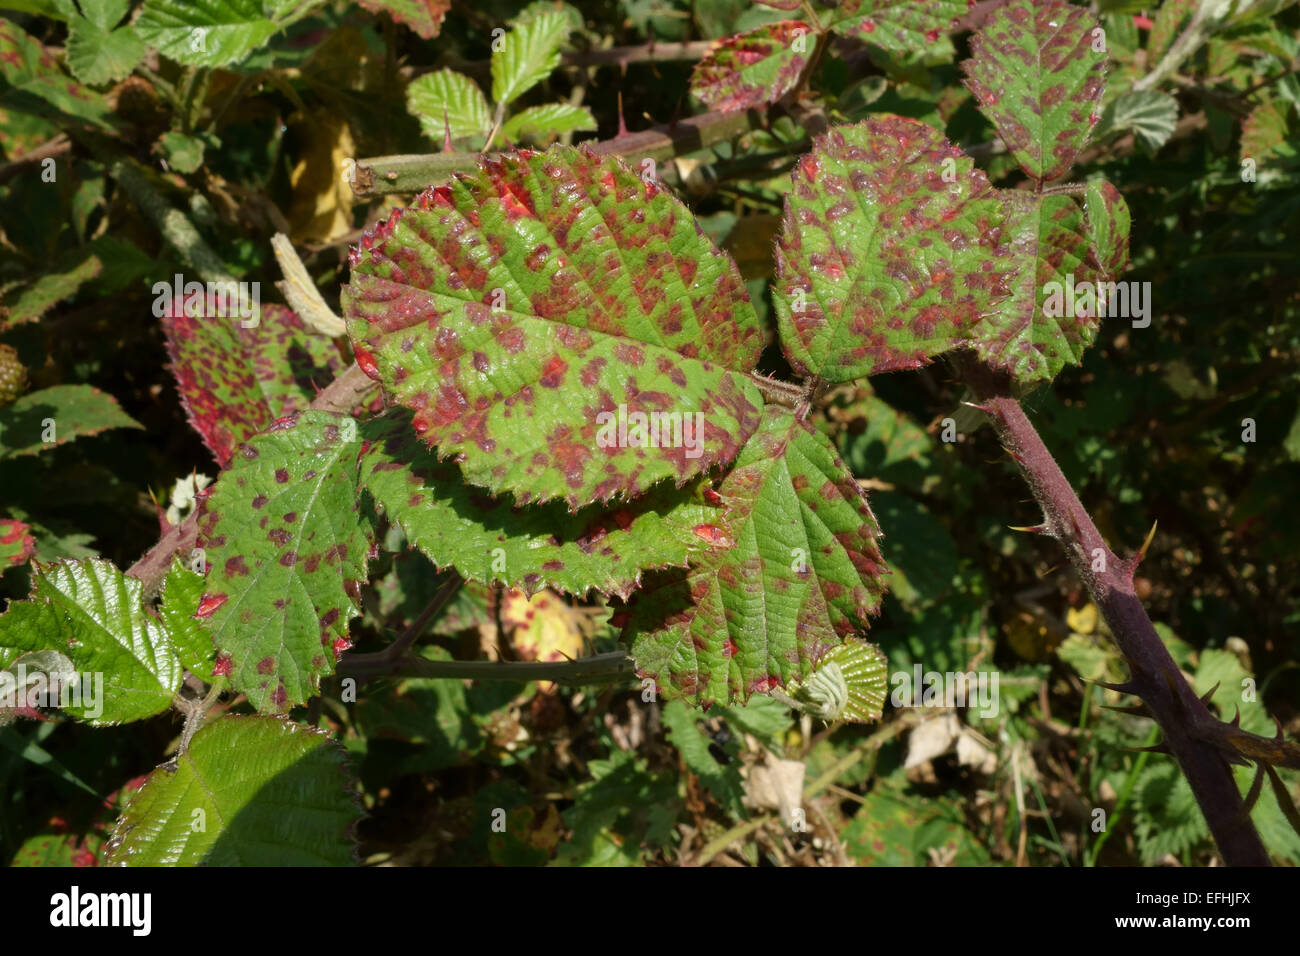 Blackberry rust, Phragmidium violaceum, lesions on the upper leaf surface of blackberry or bramble leaves, Berkshire, August Stock Photo